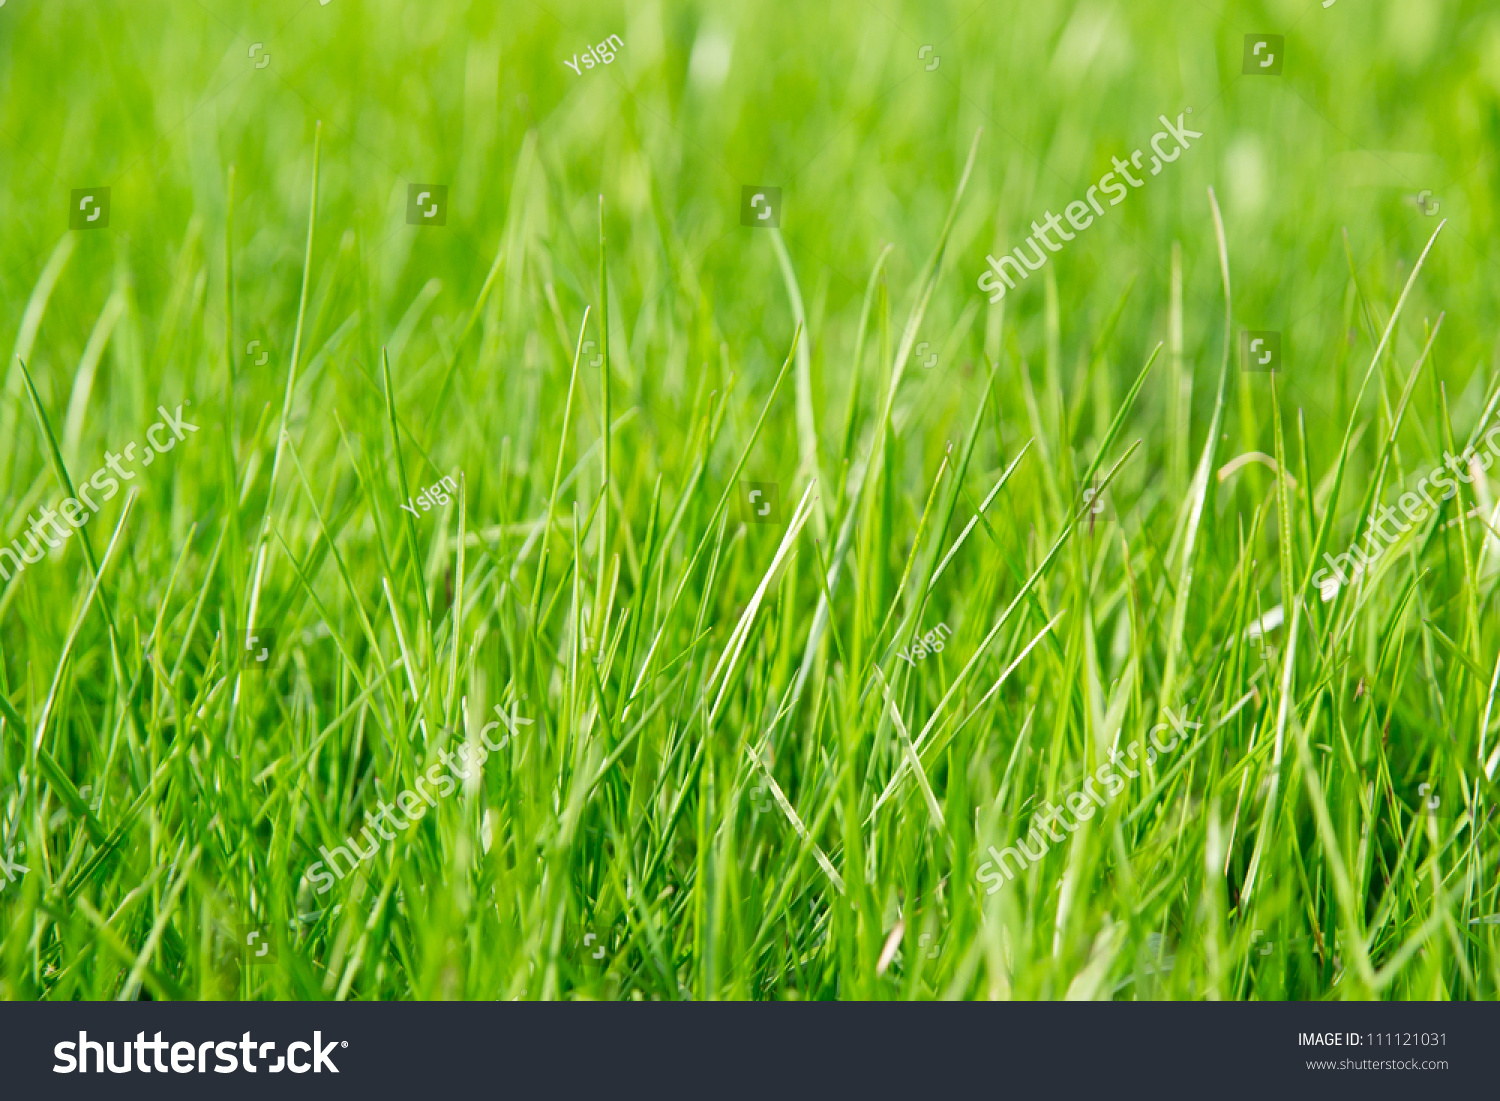 green grass in the summertime #111121031